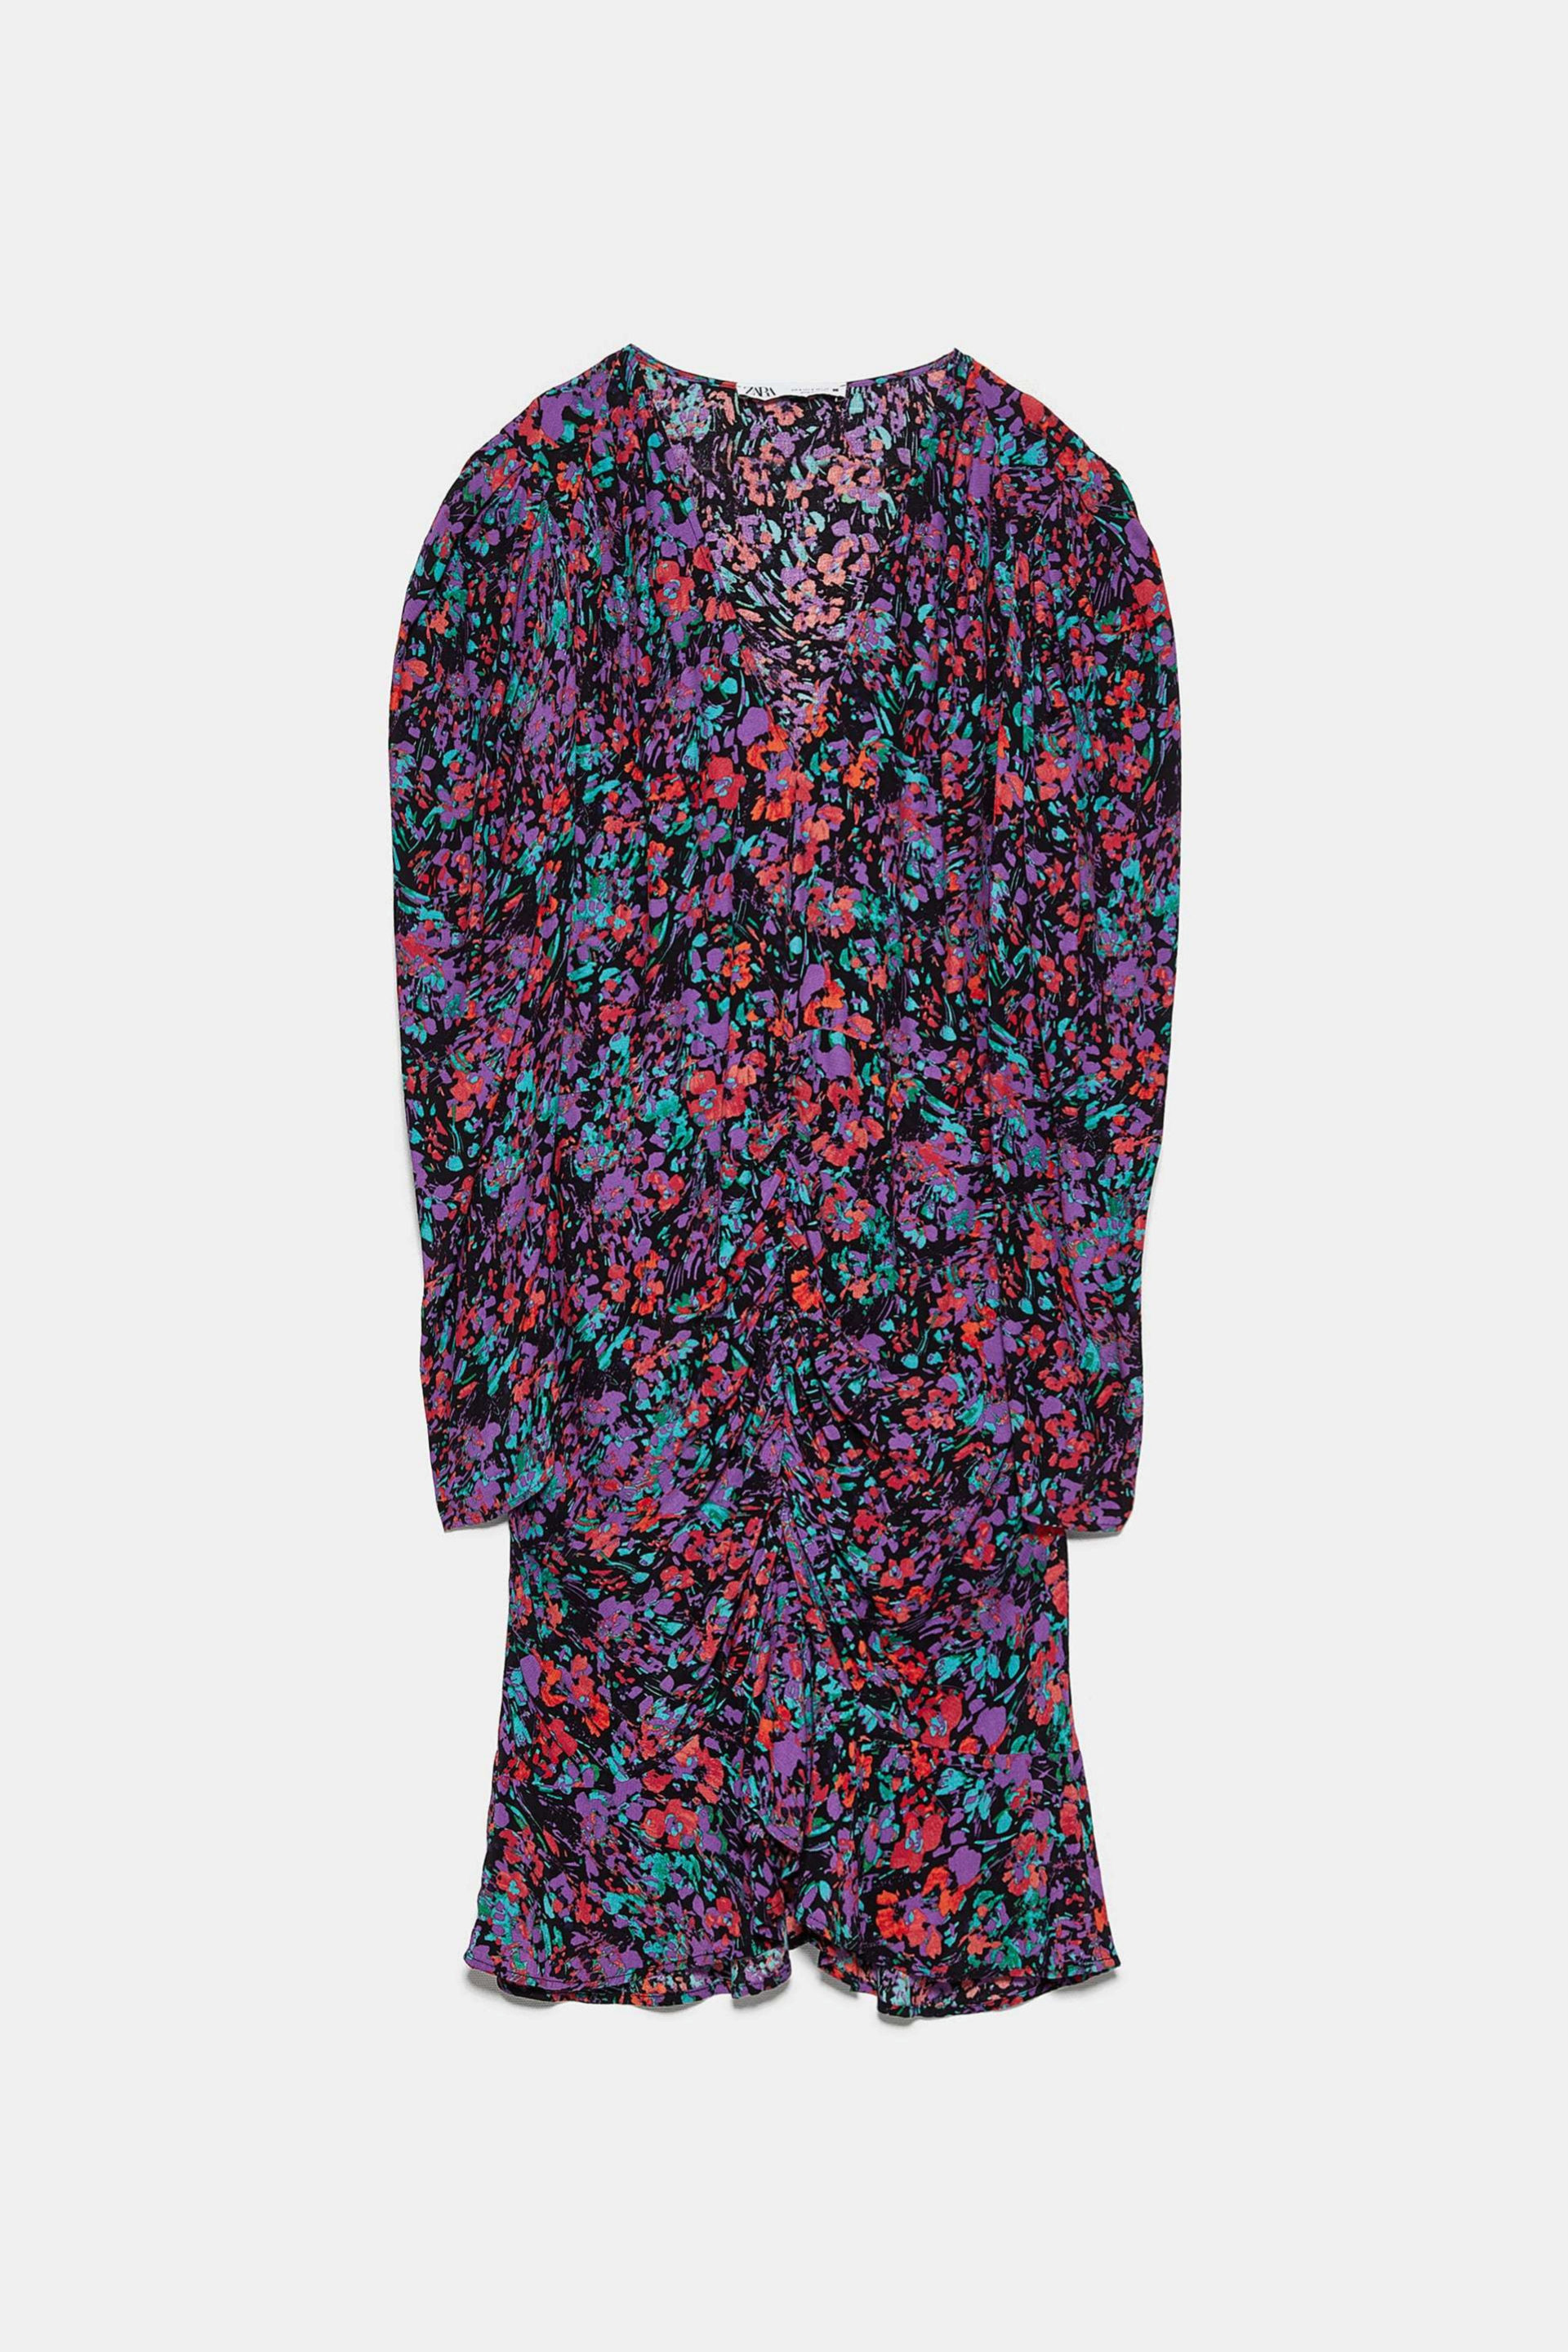 Vestido de flores con escote en V de Zara (29,95¤)